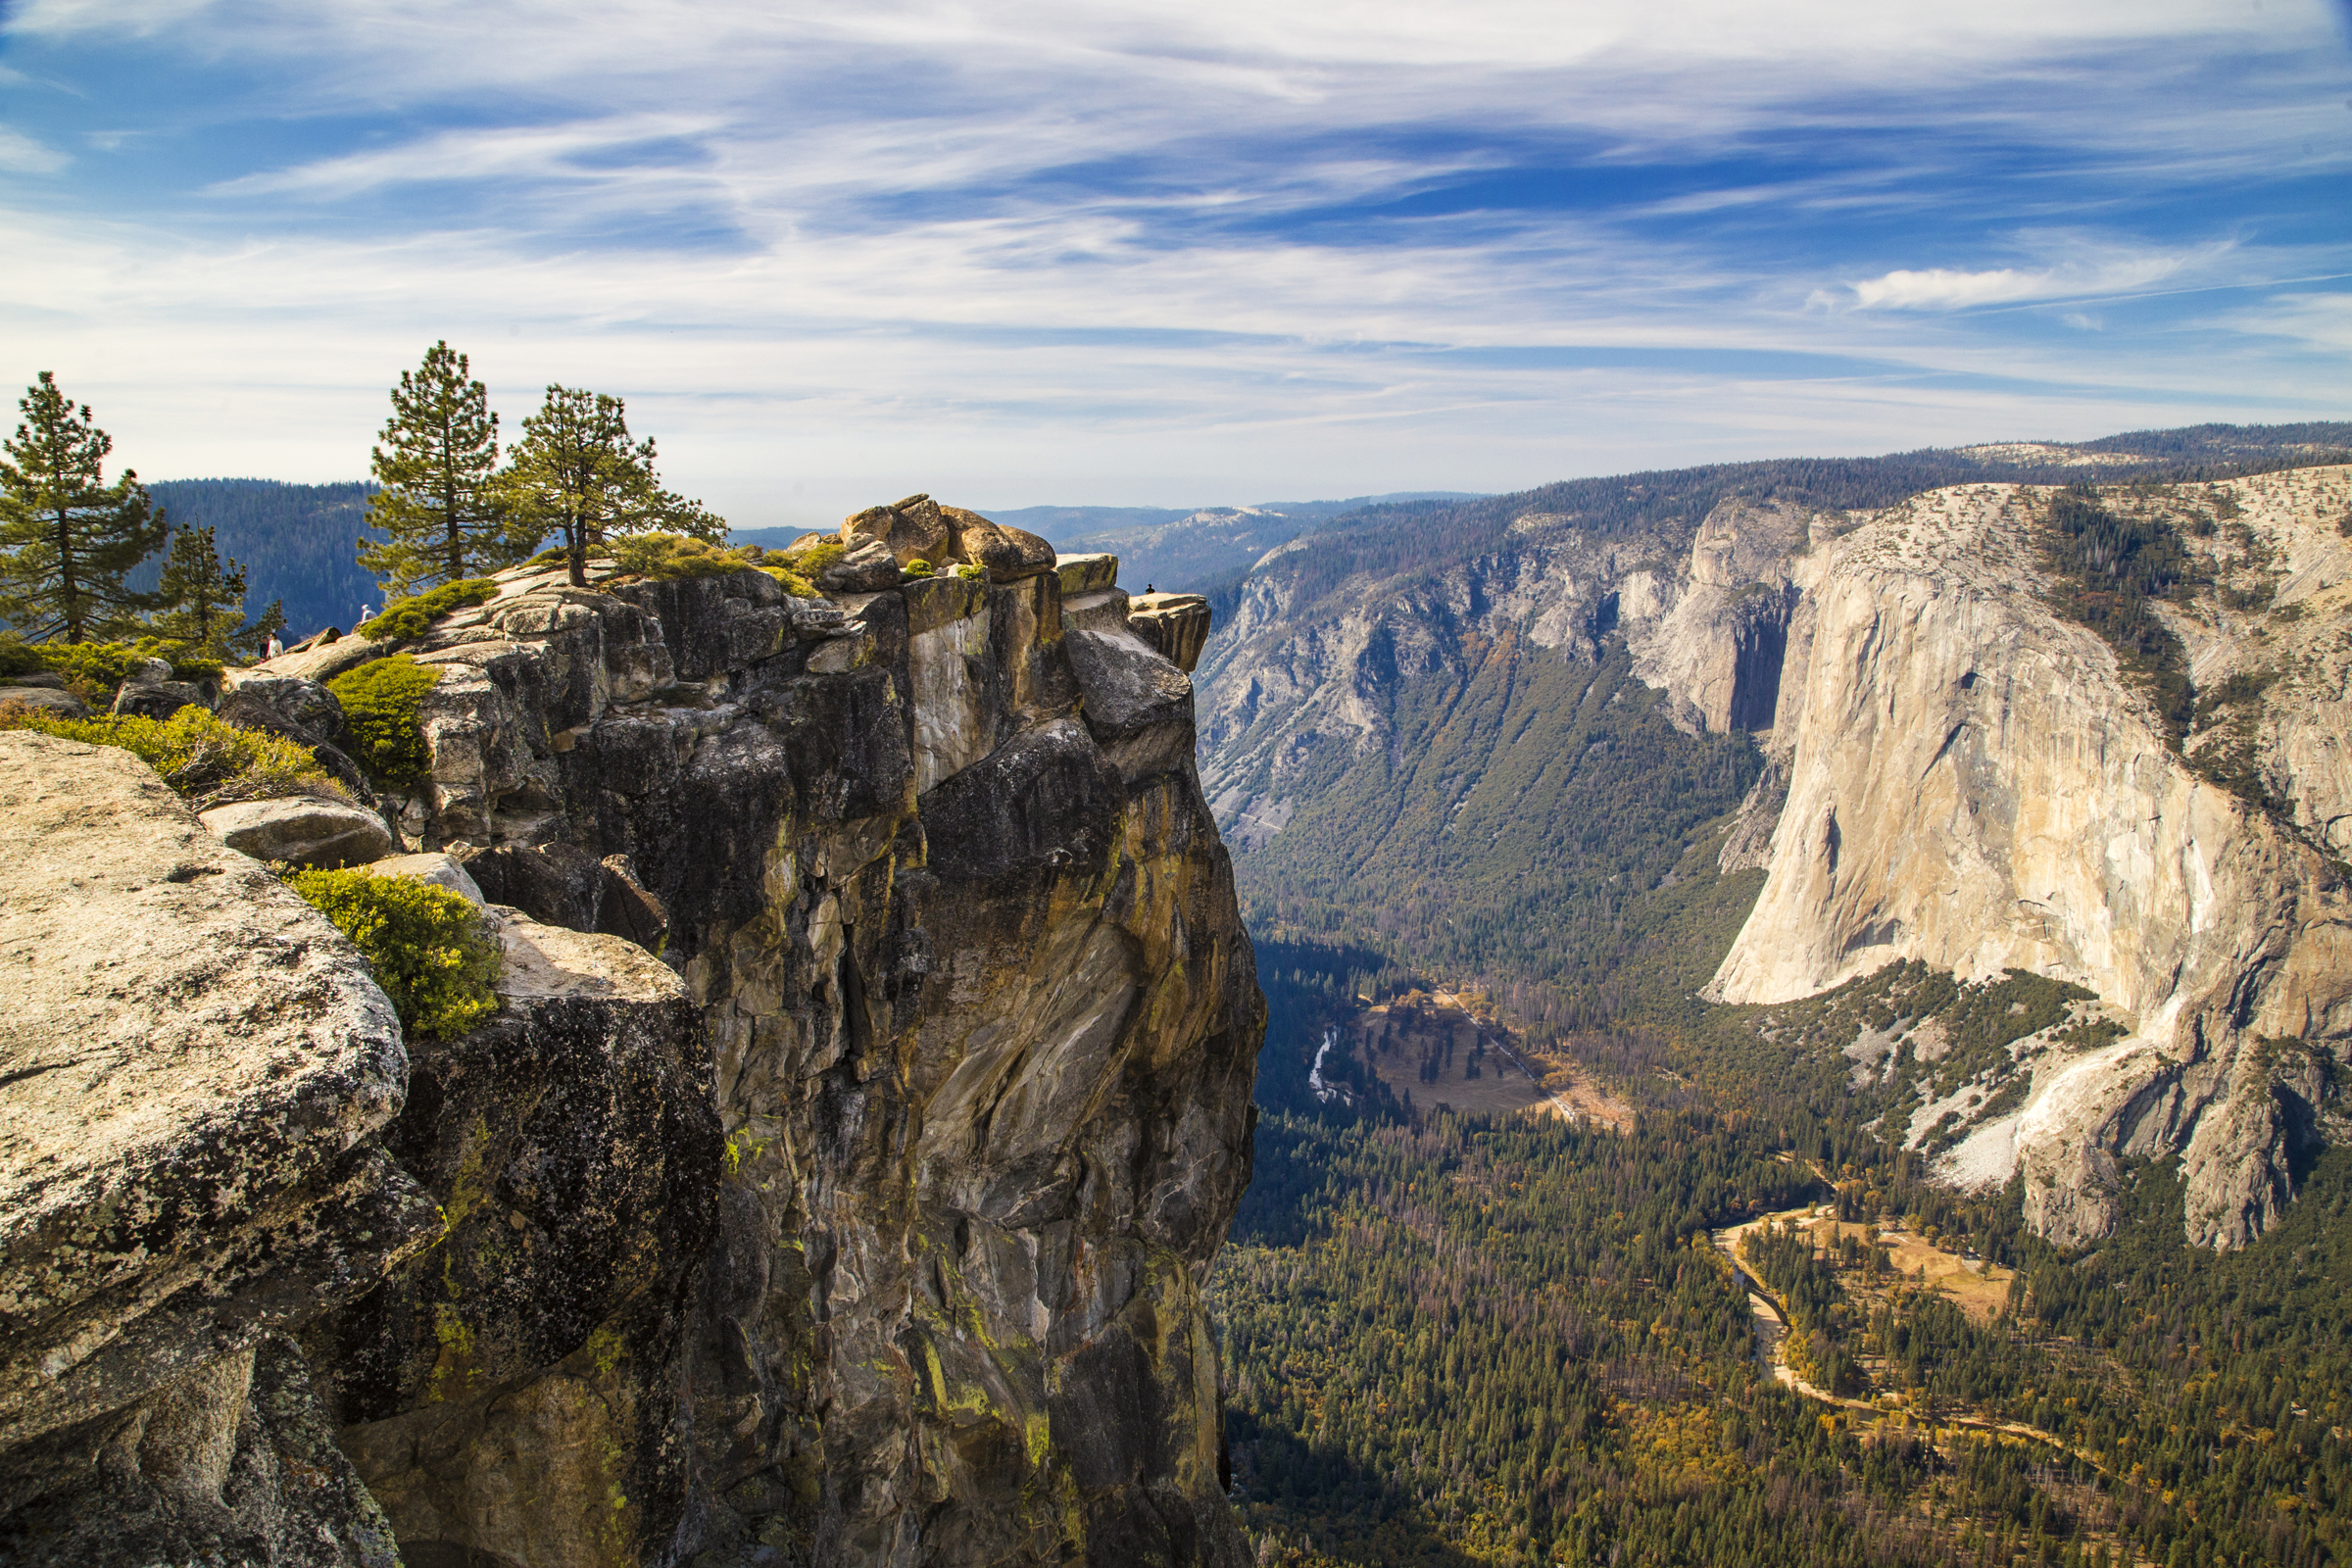  Taft Point, Yosemite National Park, California 